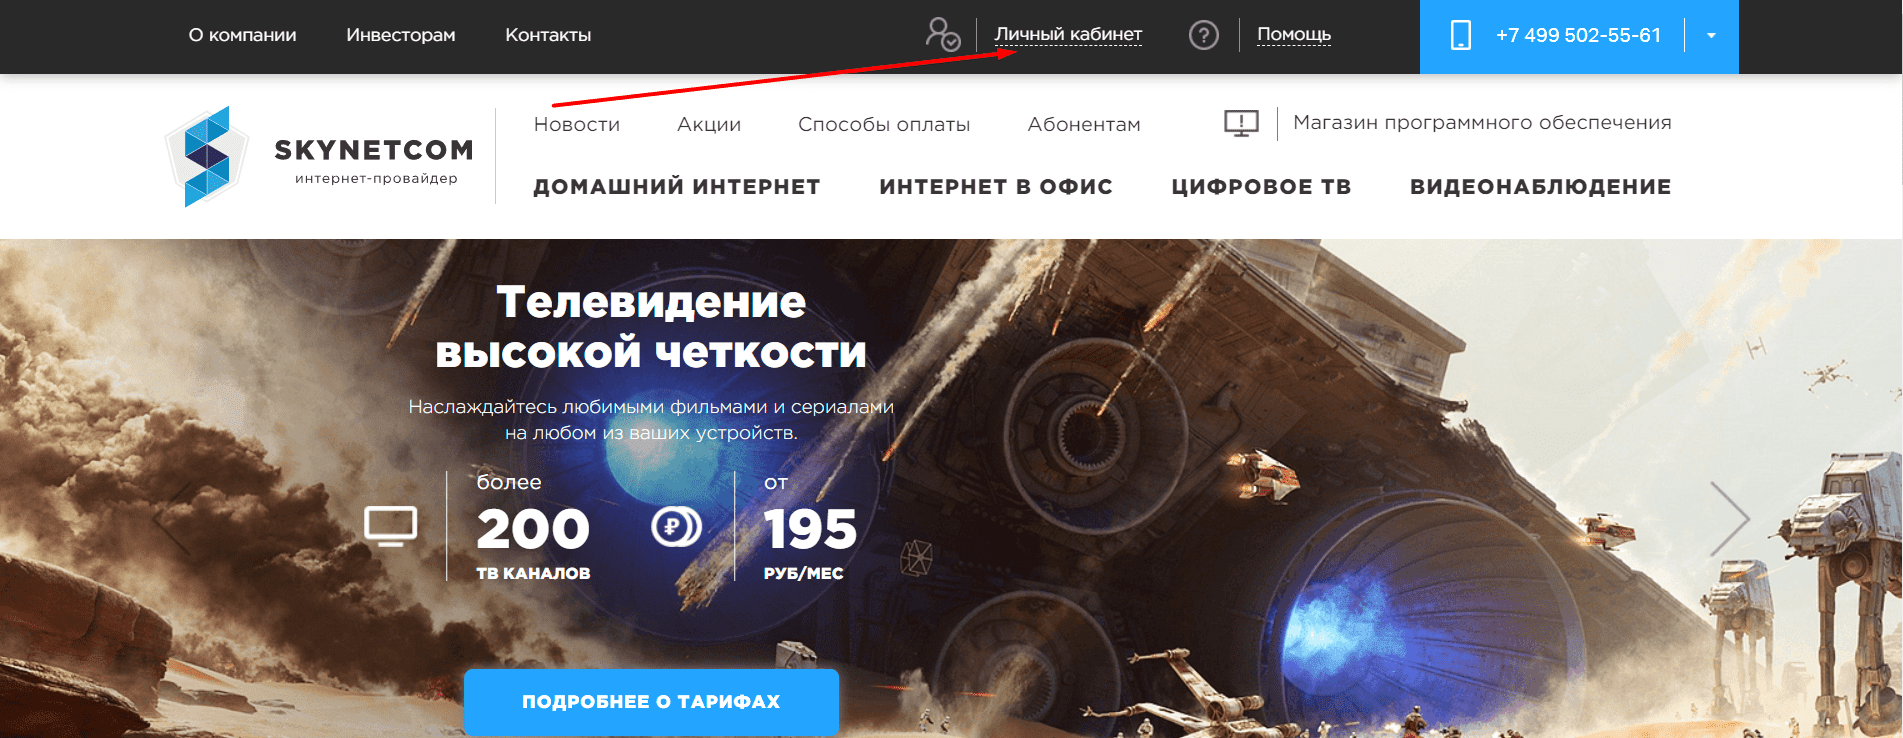 Скайнетком (skynetcom.ru)